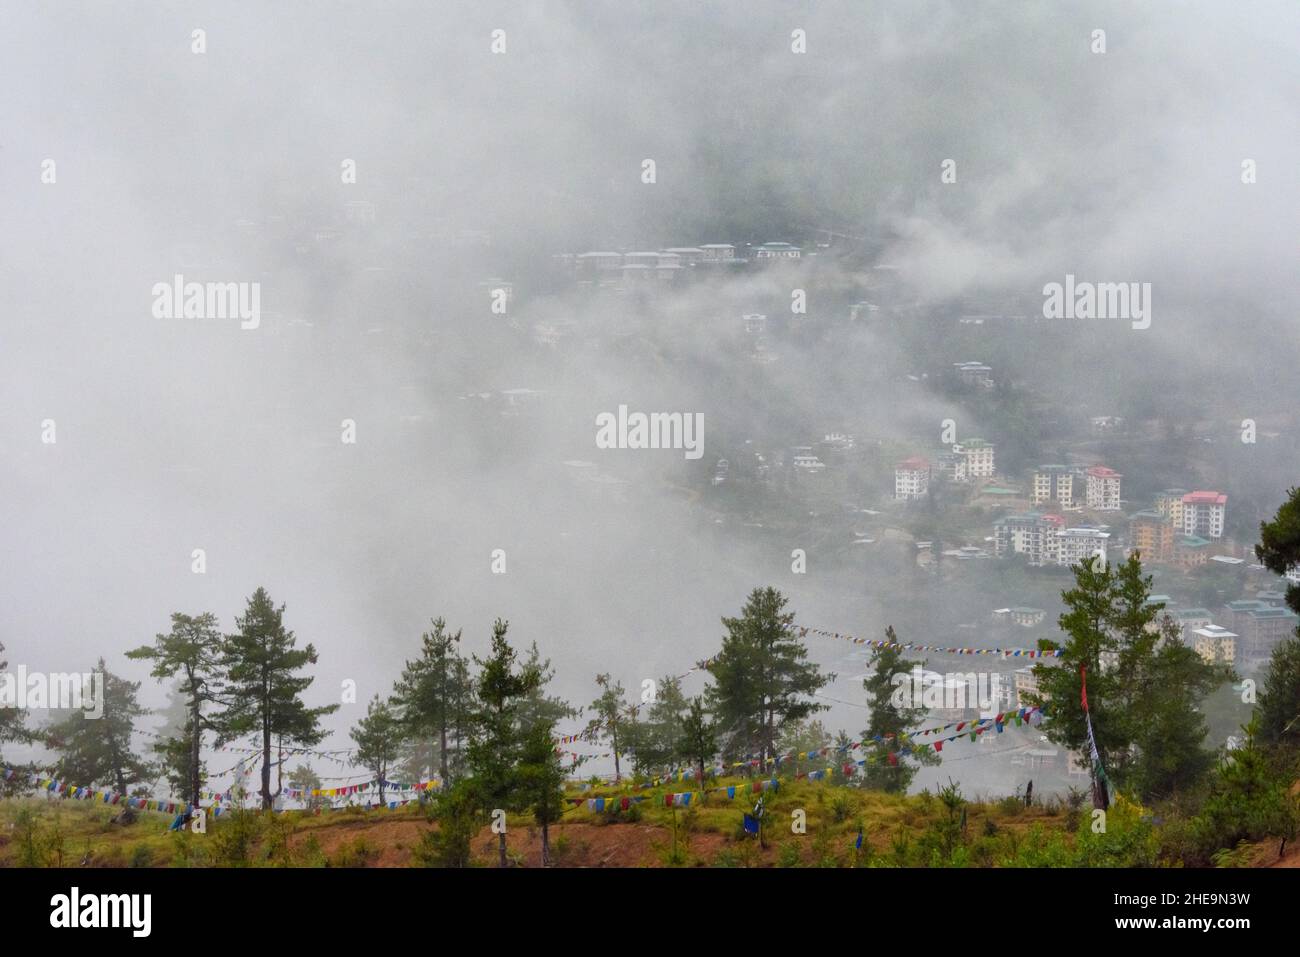 Mountain covered in mist, Thimphu, Bhutan Stock Photo